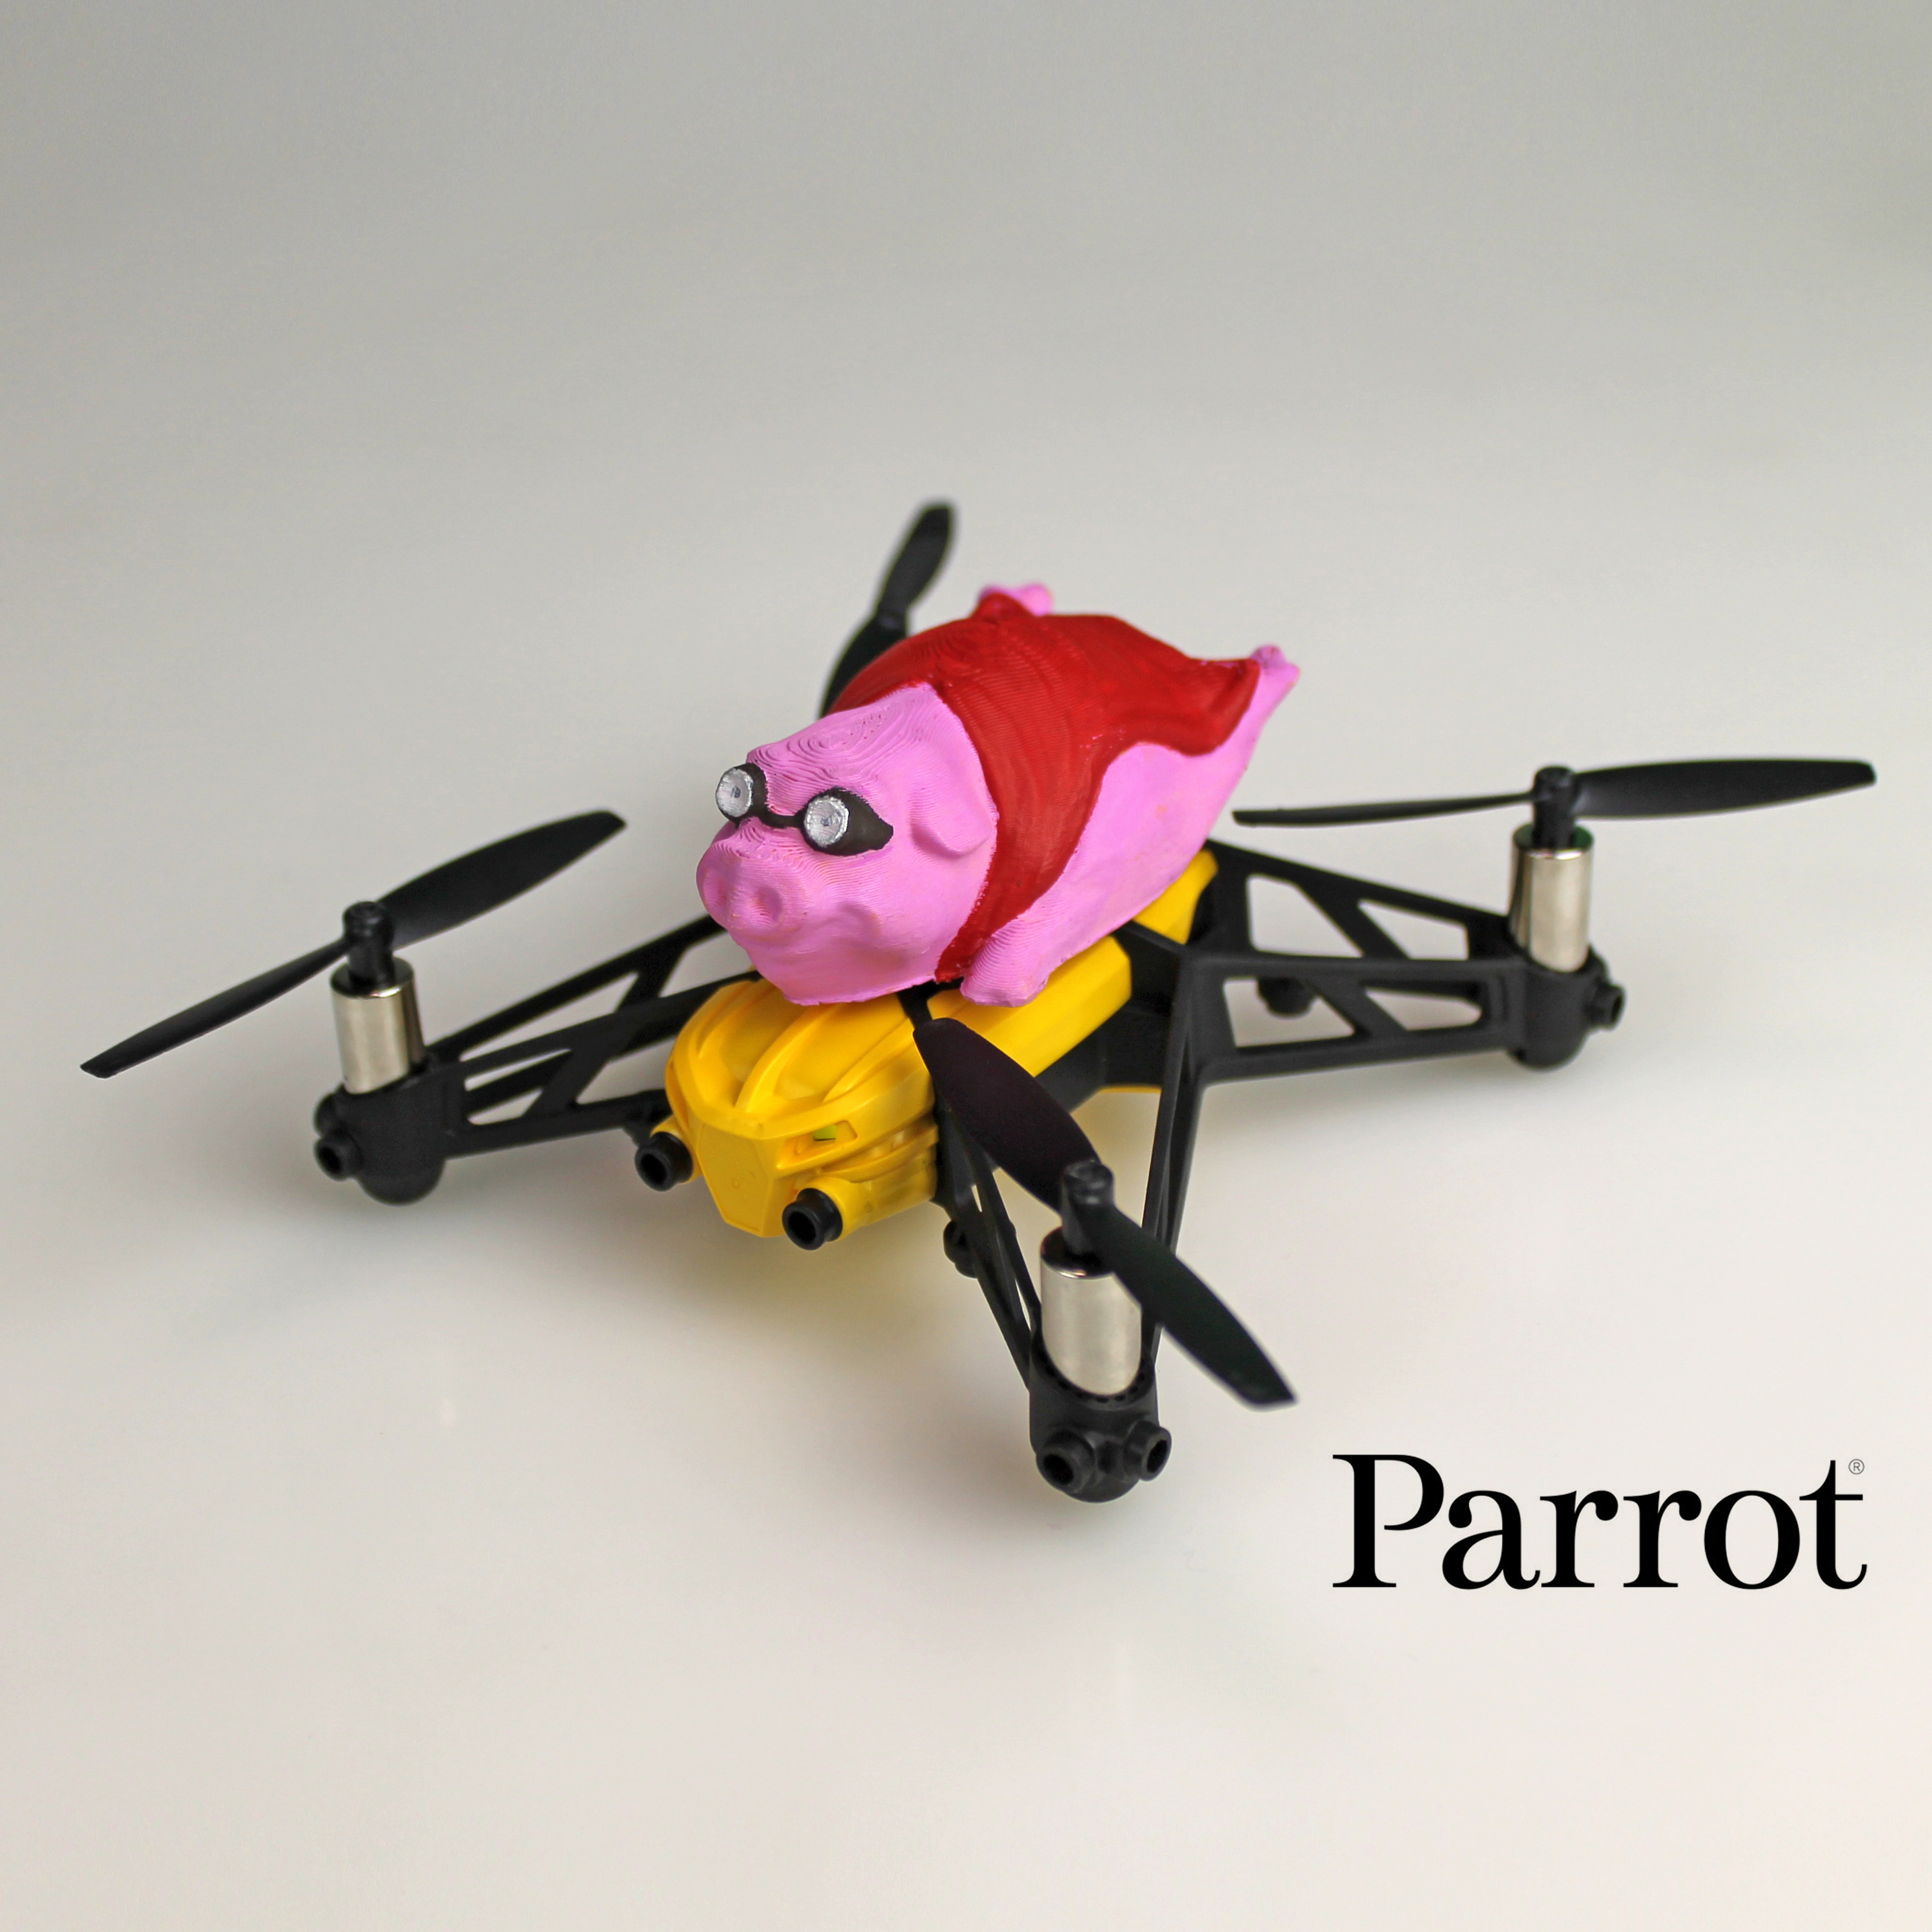 Parrot Minidrone Flying Pig!